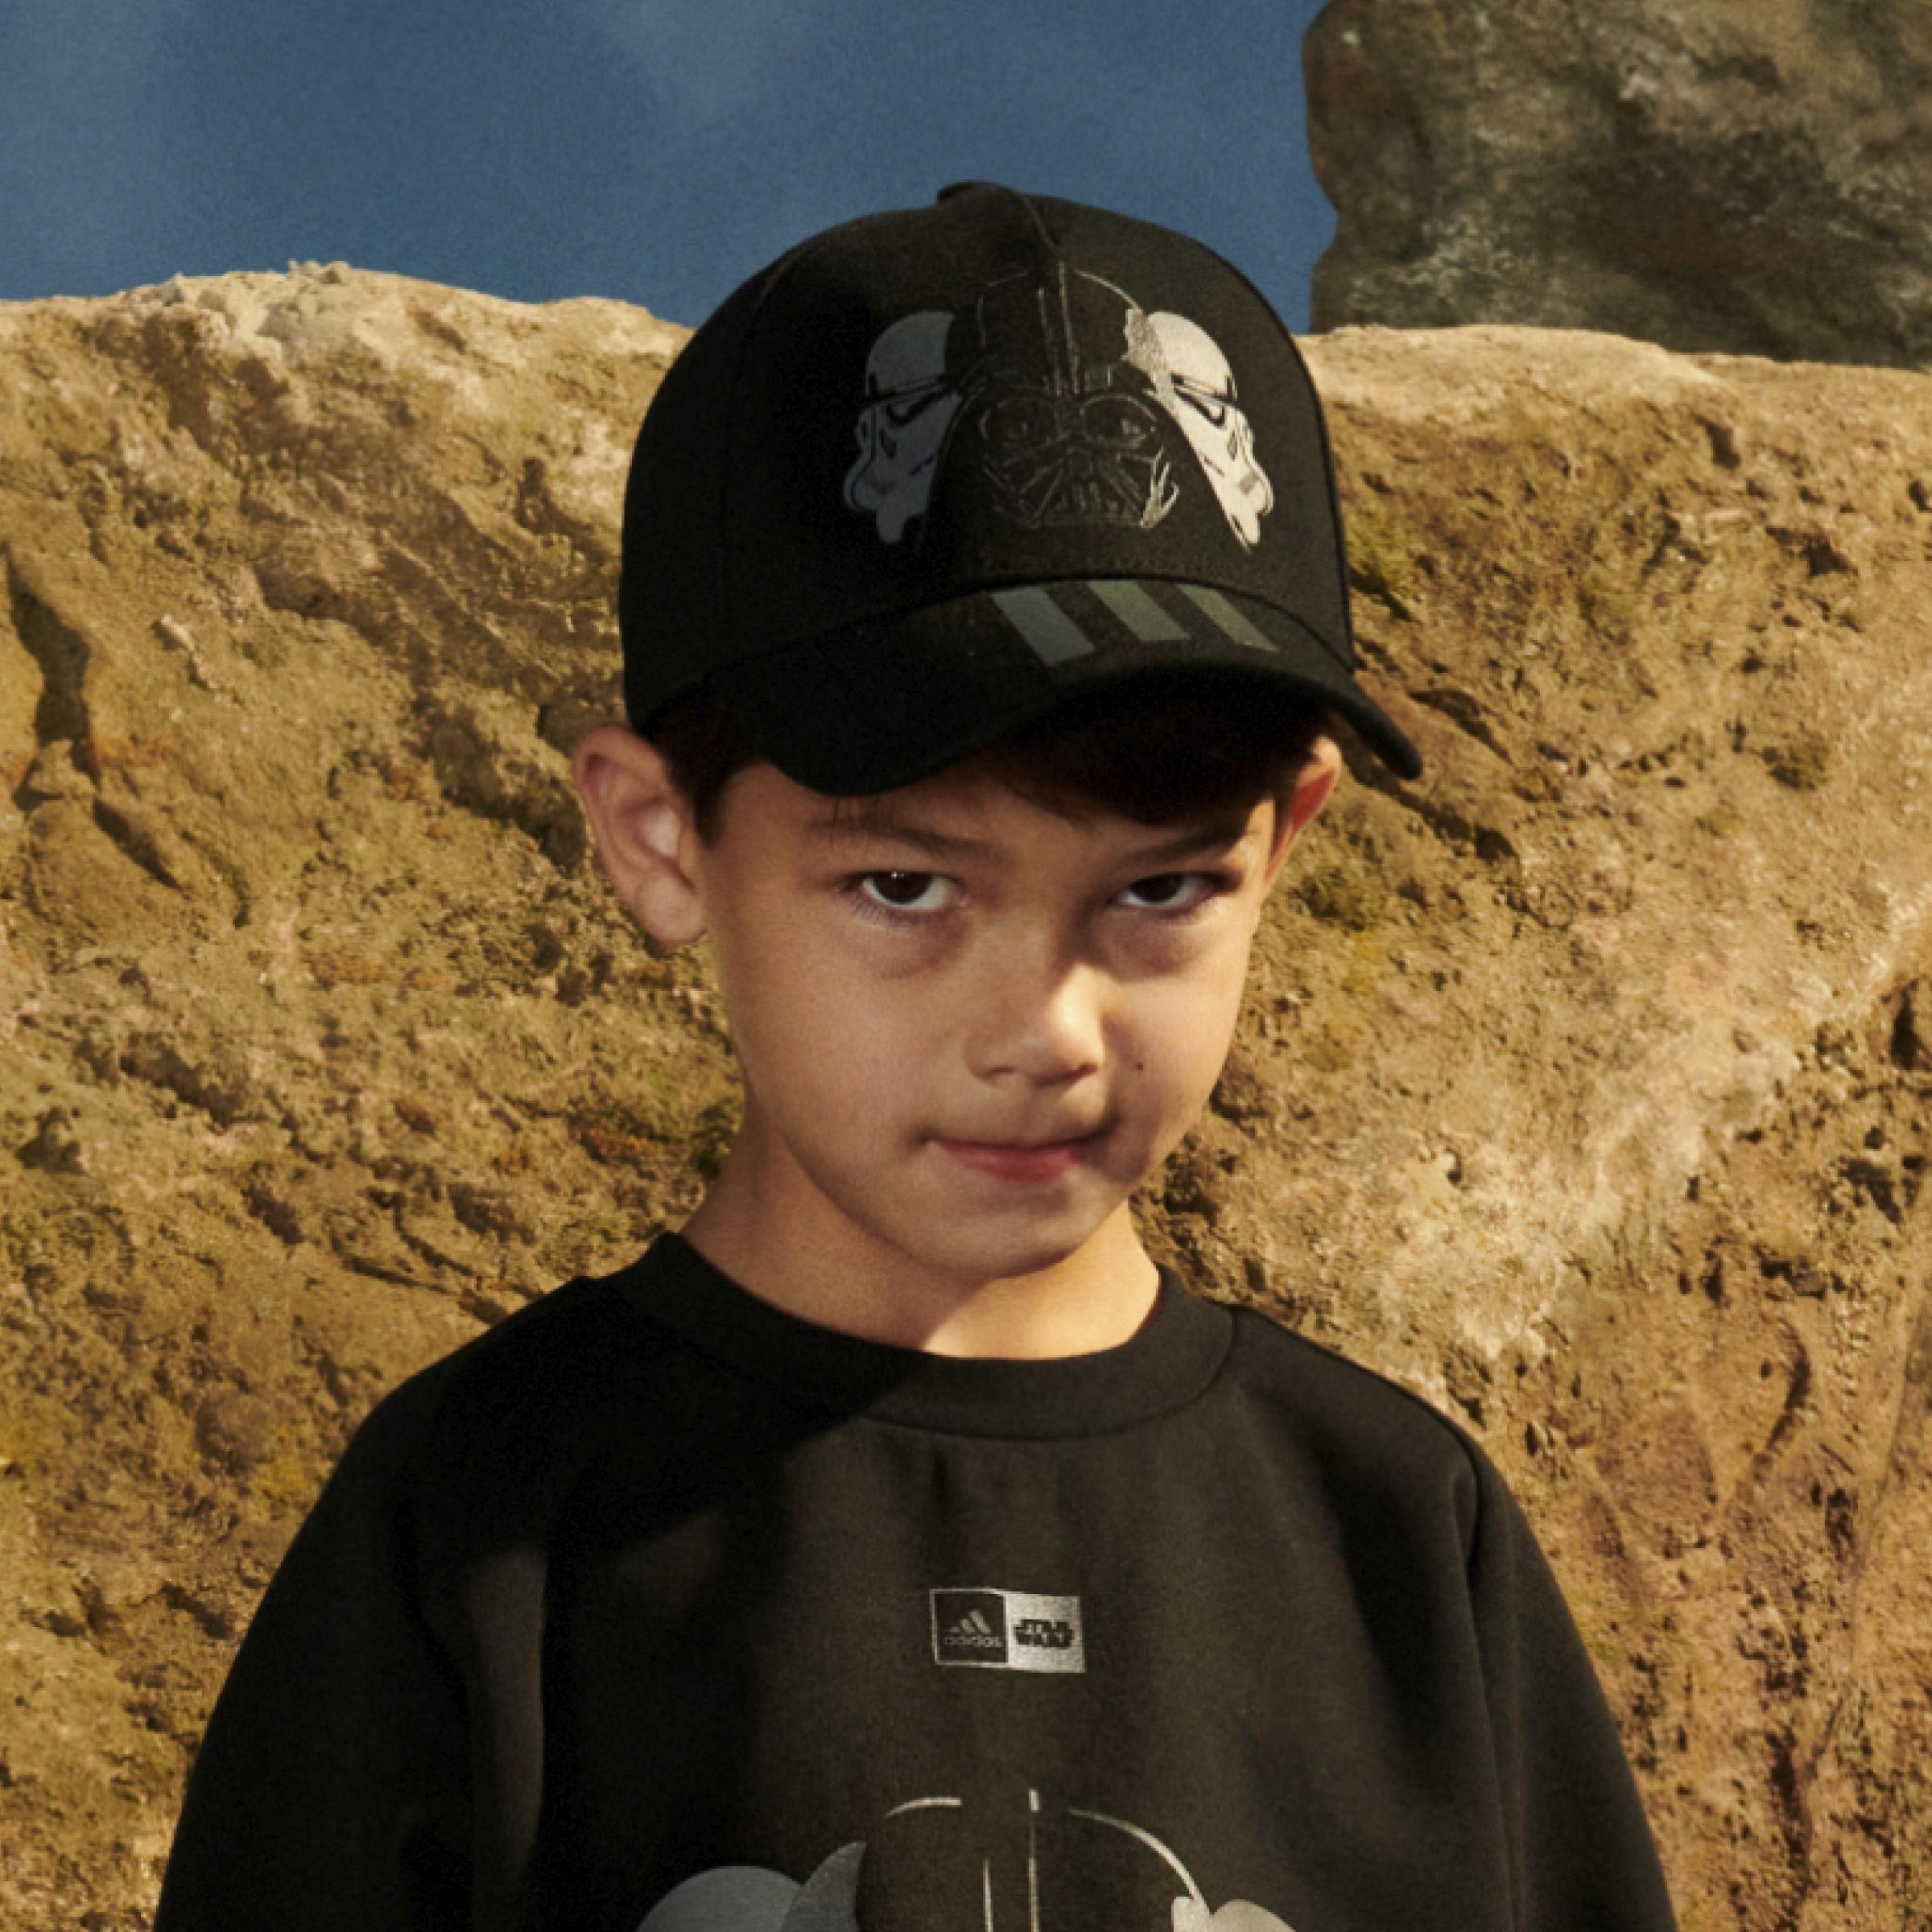 adidas - Kids Boys Star Wars Cap, Black